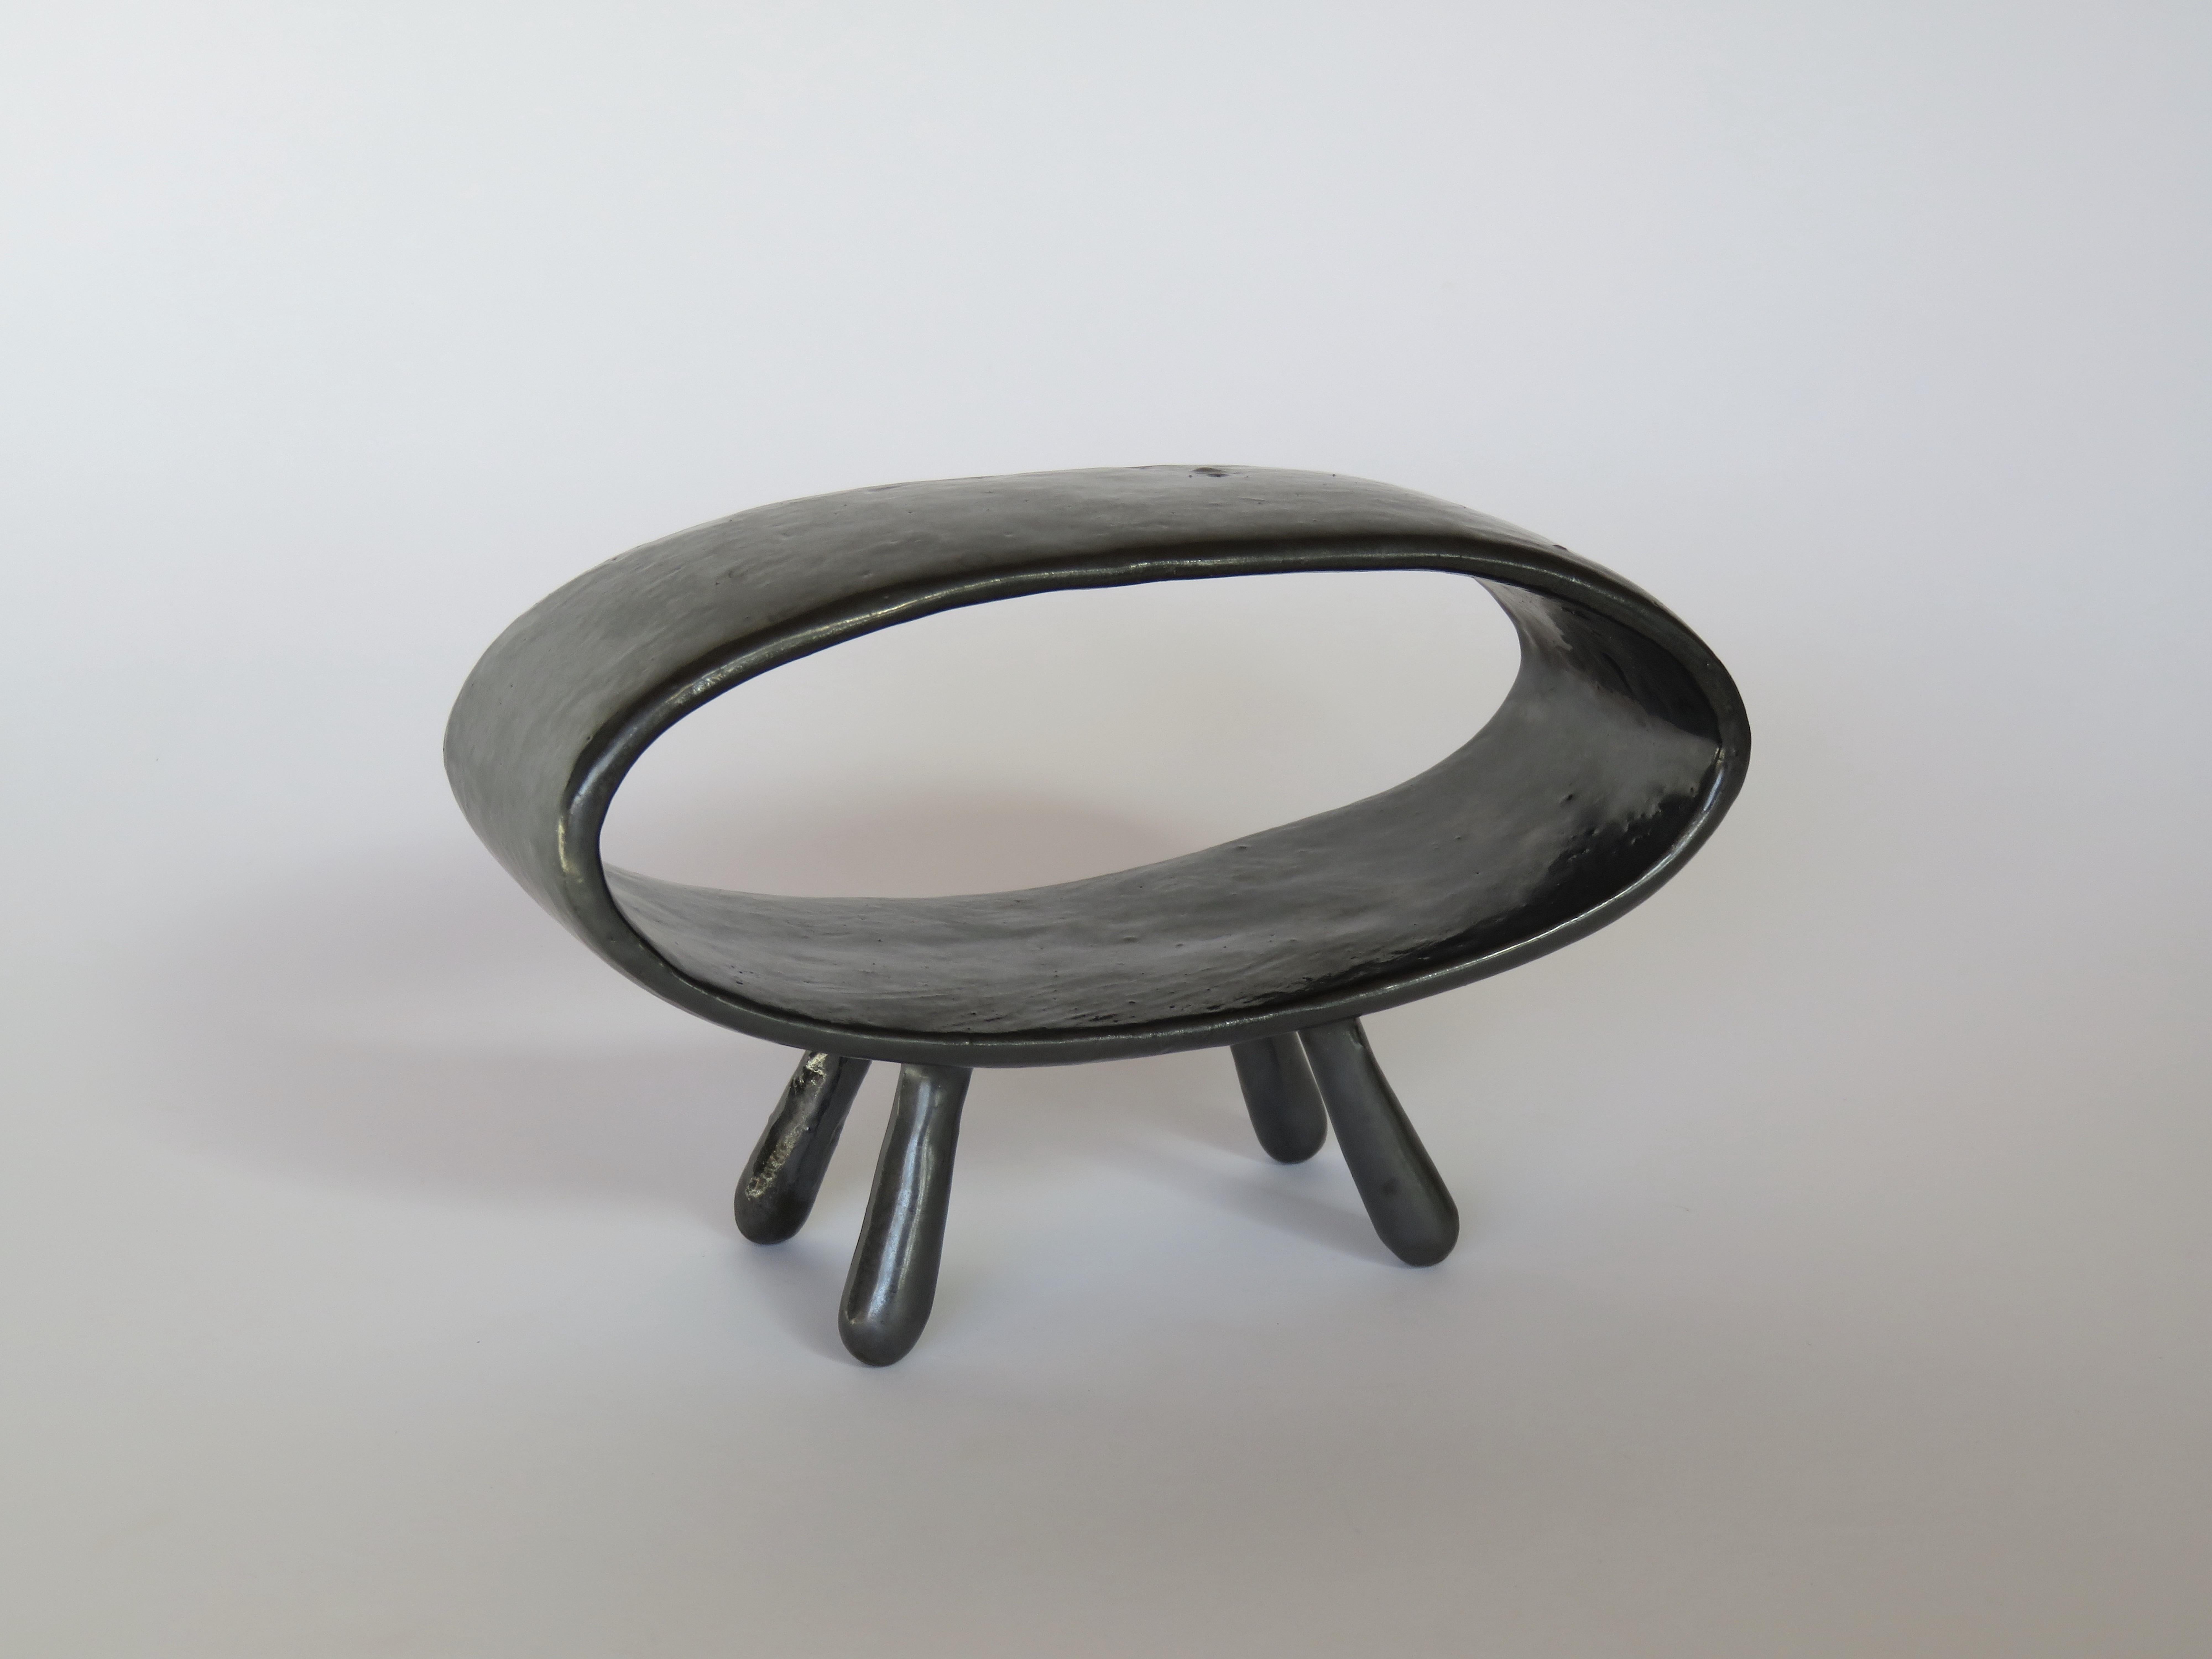 Glazed Metallic Black Ceramic Sculpture, Hollow Pointed Oval on 4 Legs, Hand Built